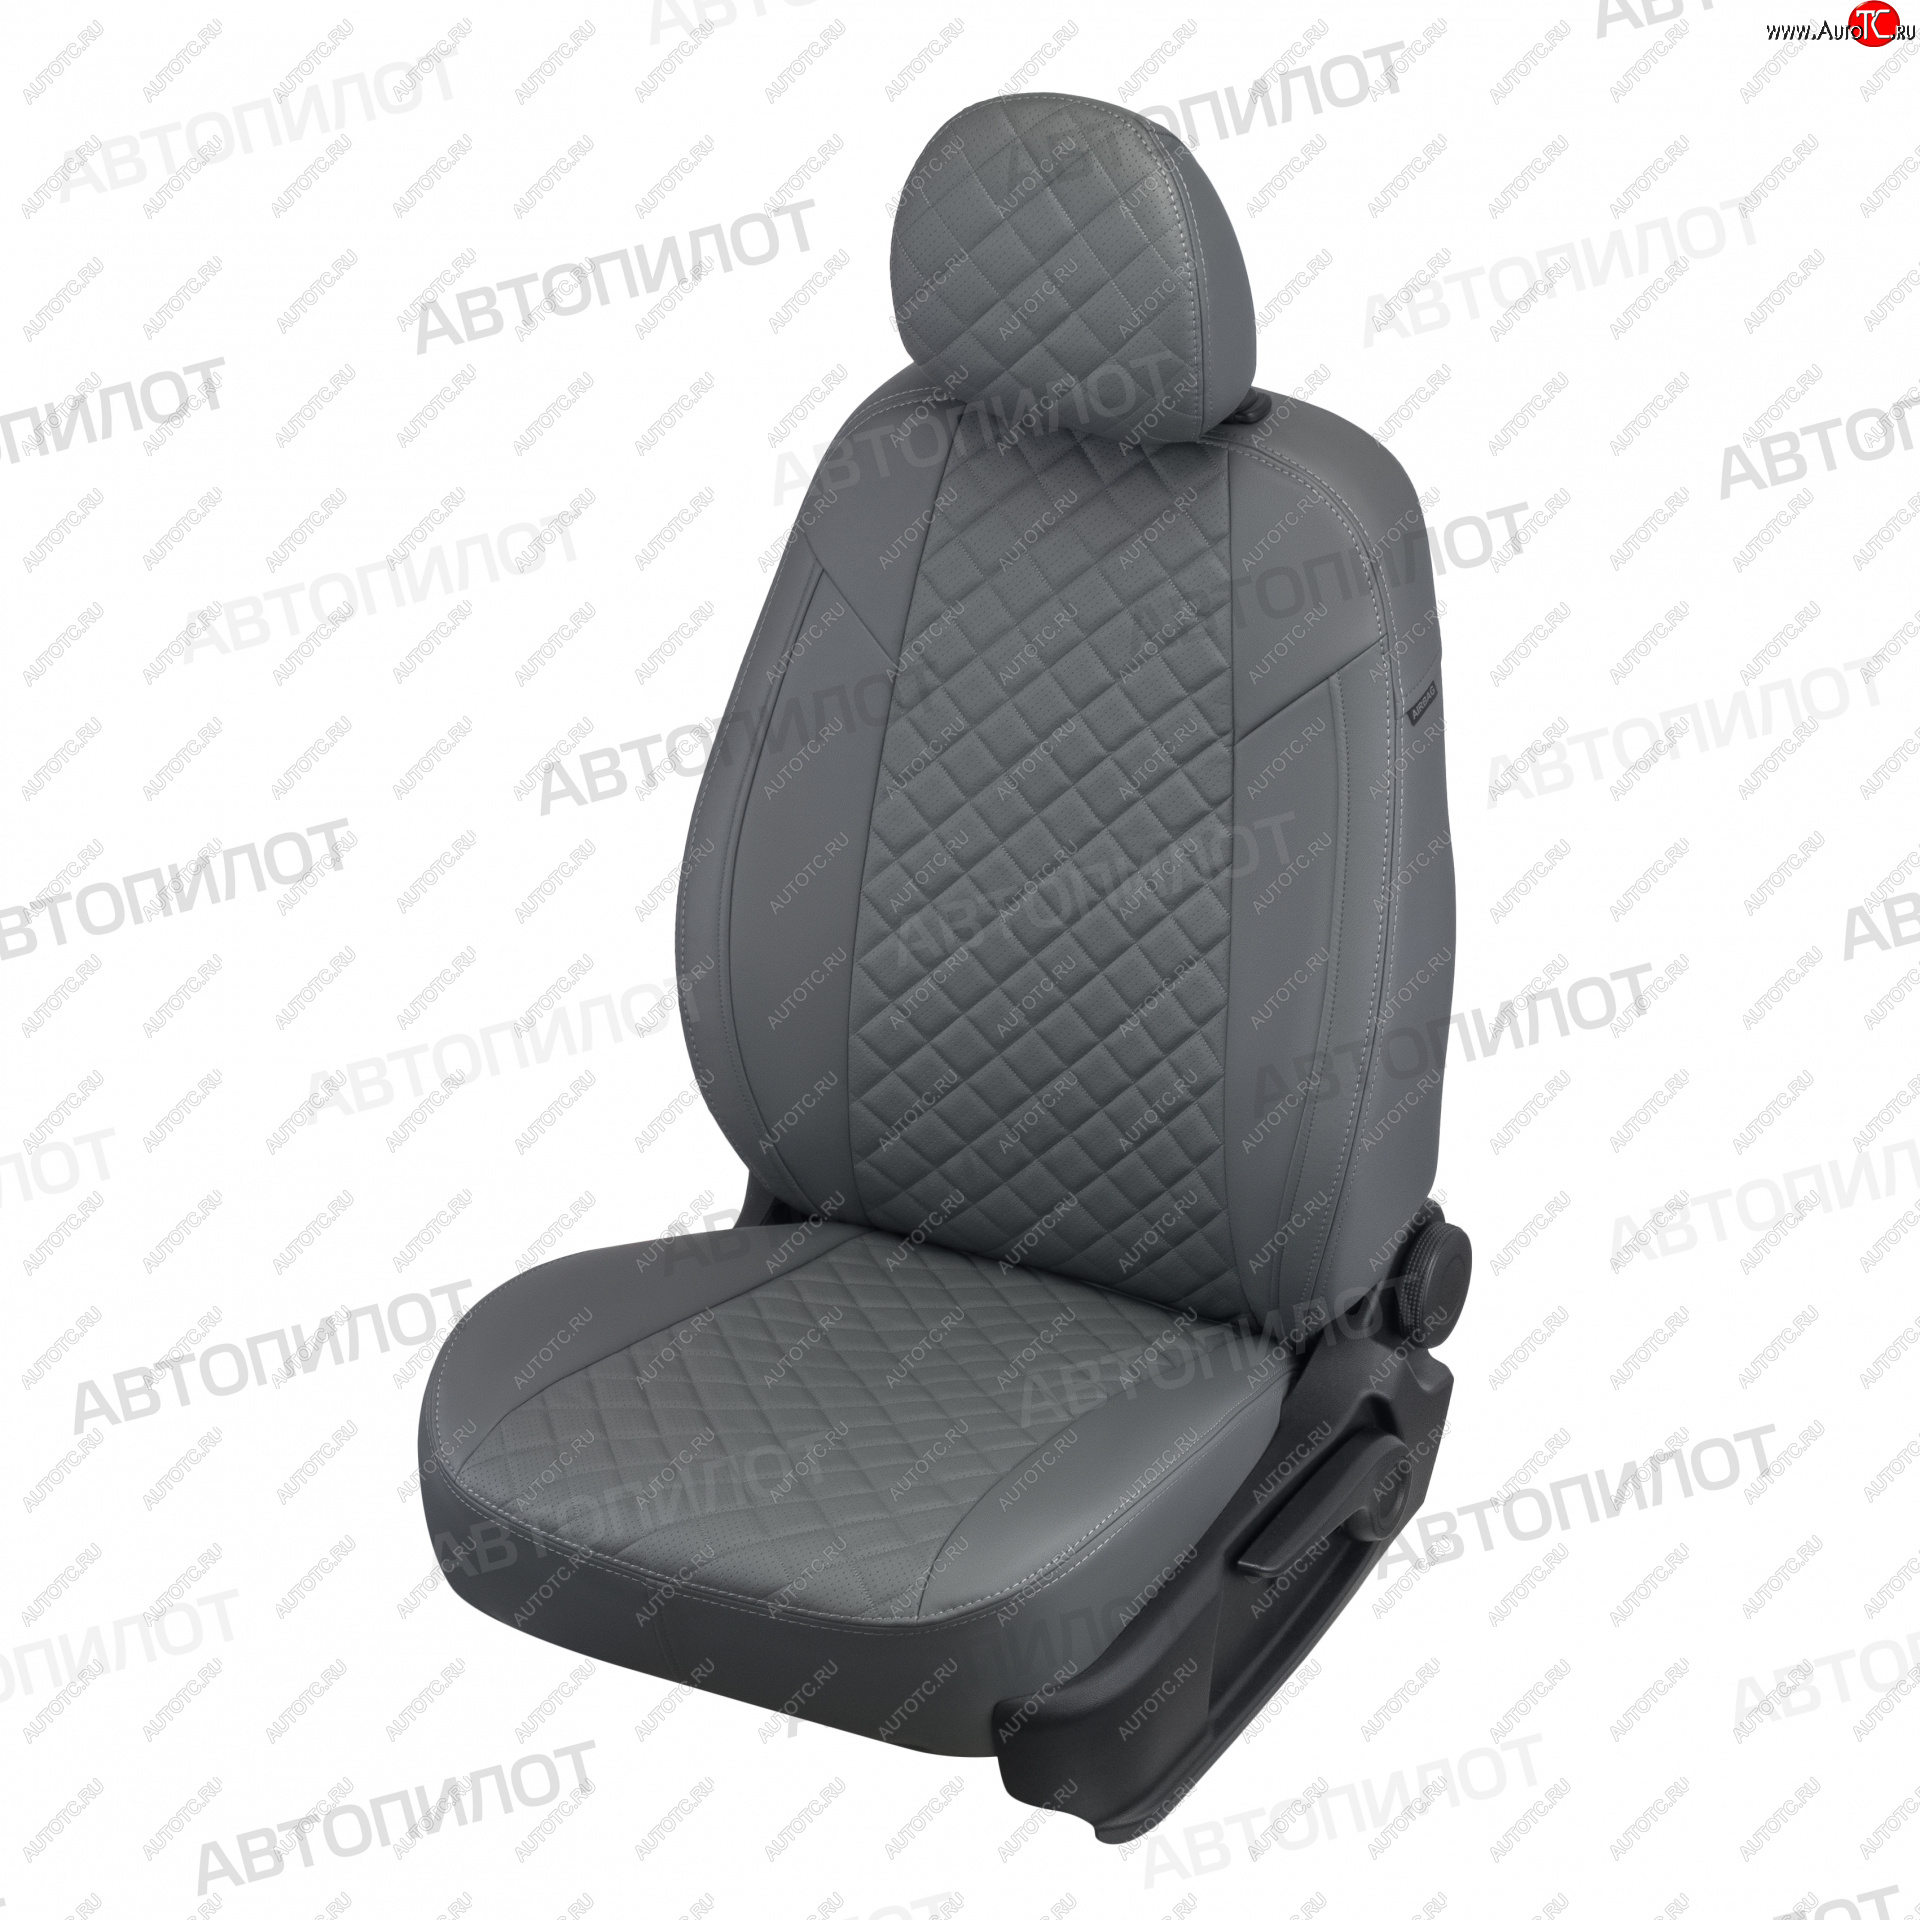 13 999 р. Чехлы сидений (экокожа) Автопилот Ромб  Hyundai Terracan  1 HP (2001-2007) (серый)